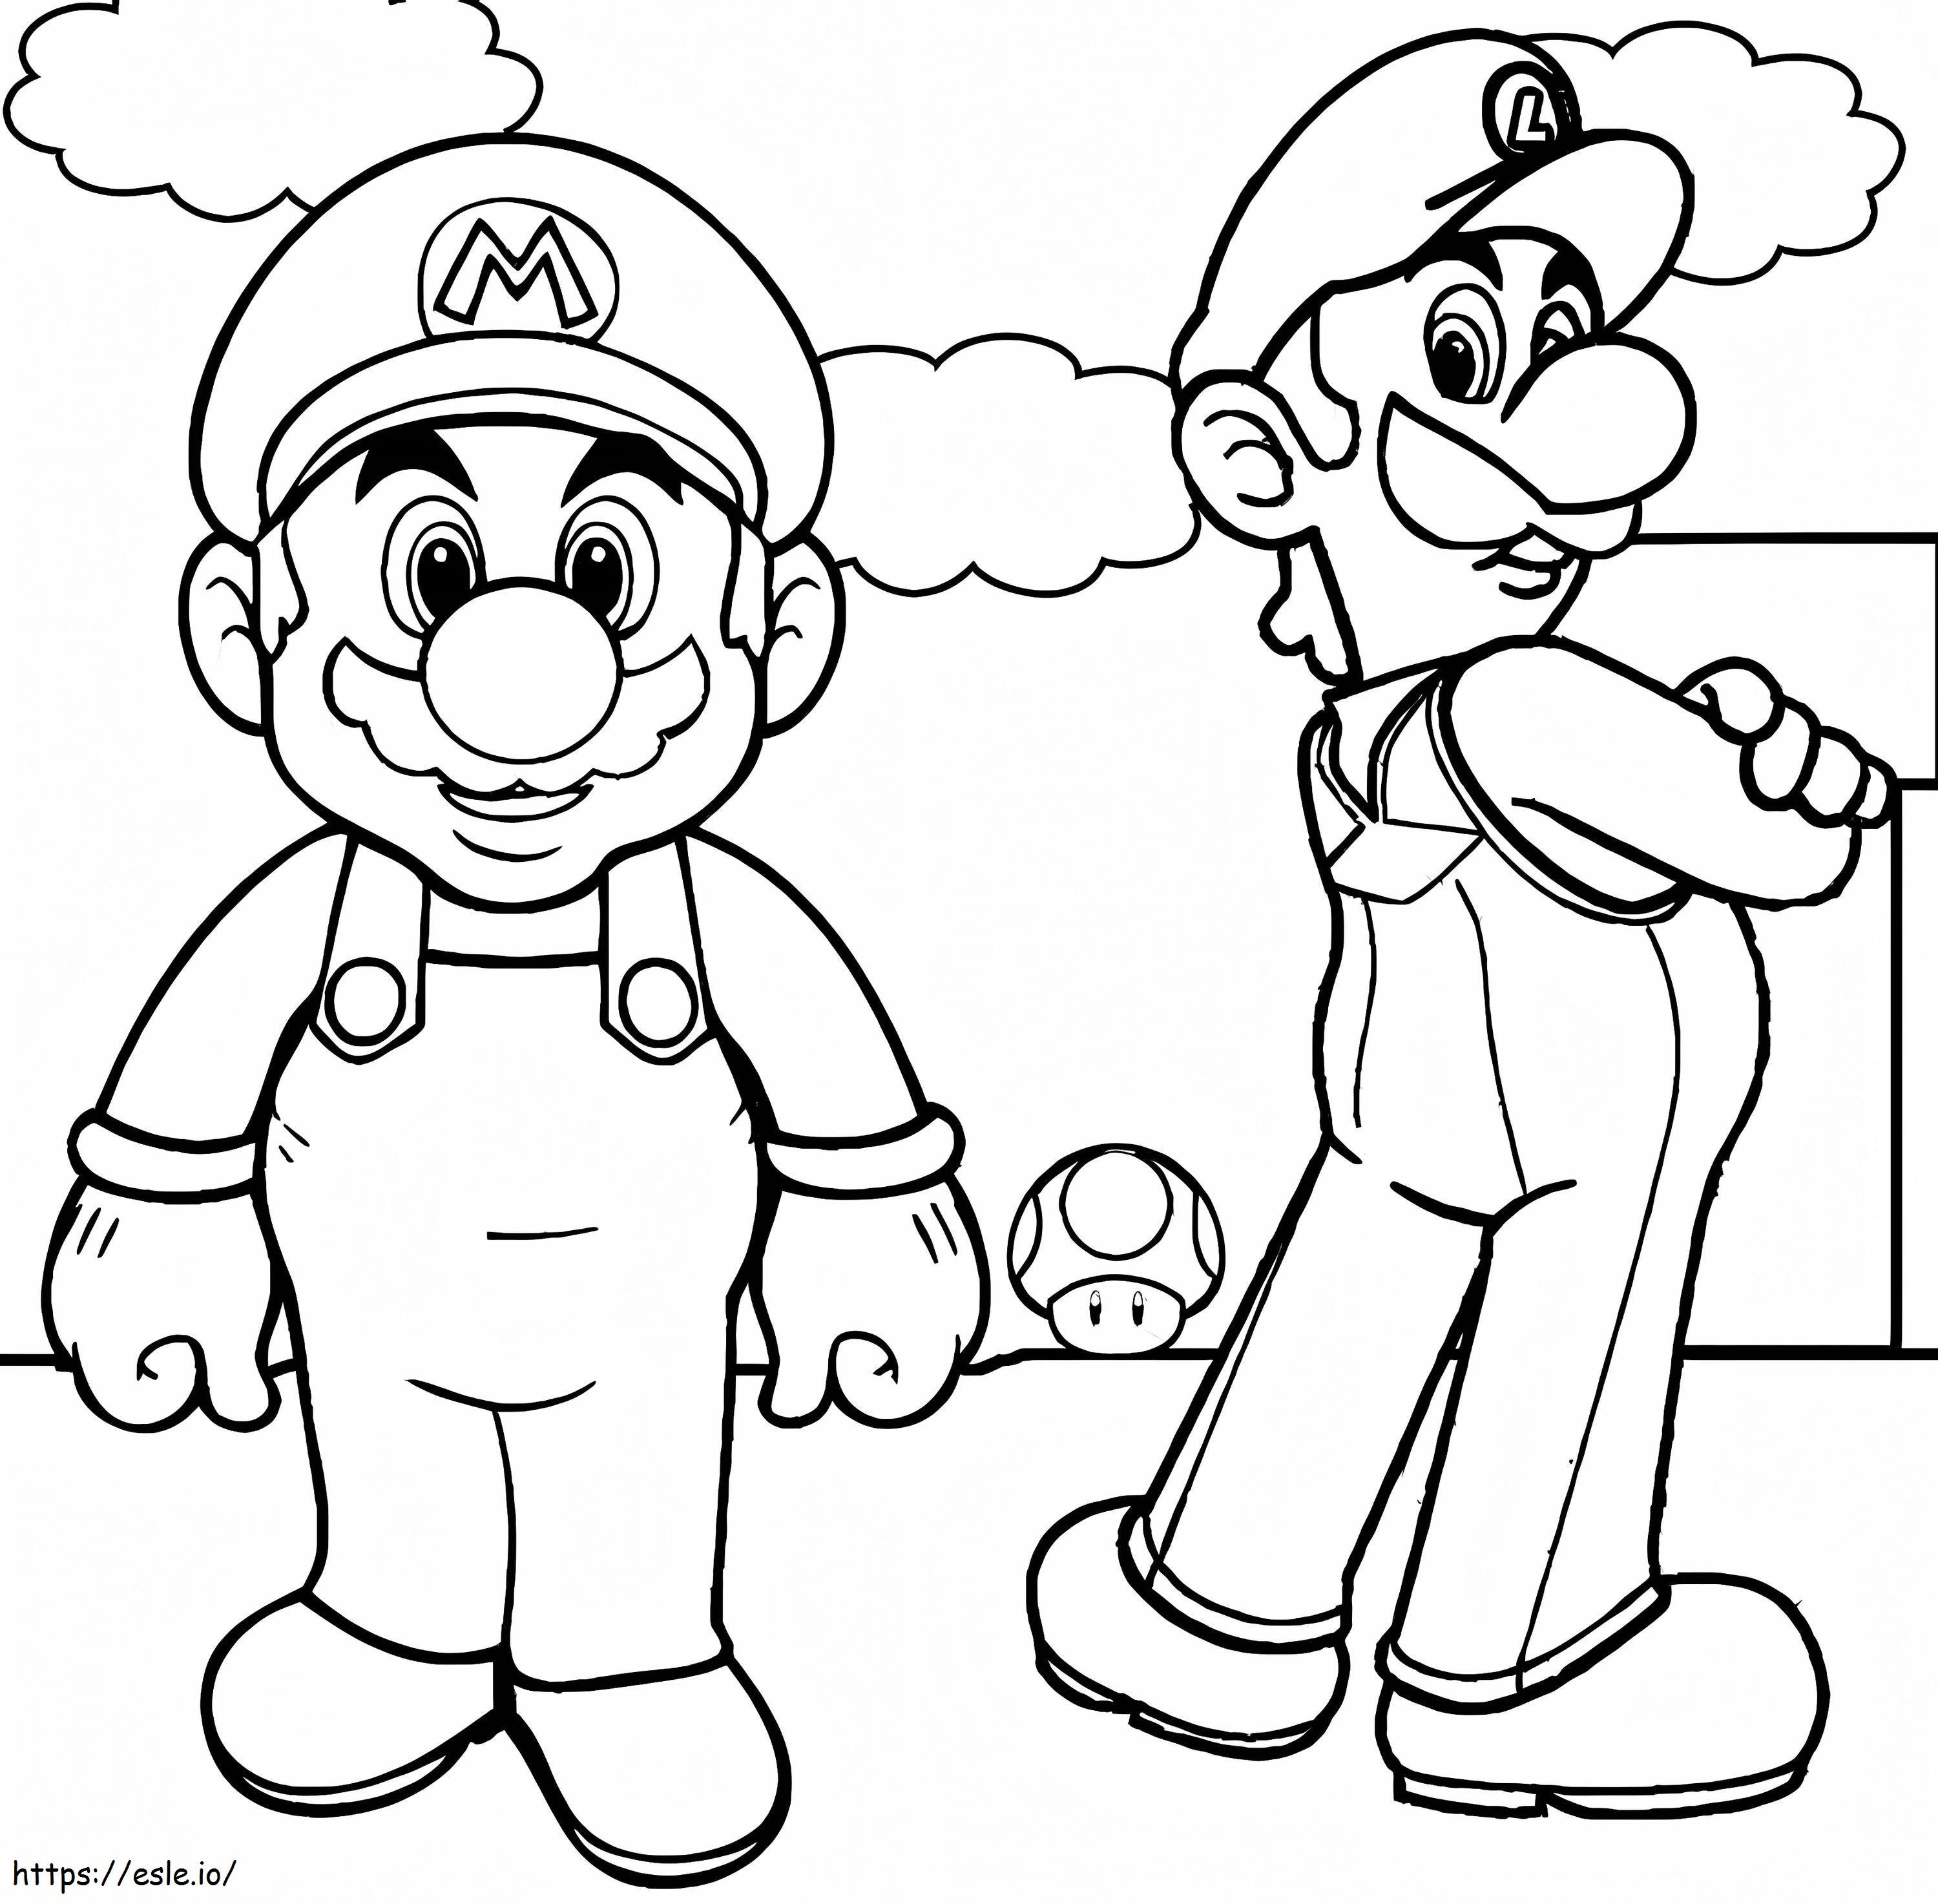 Luigi Básico und Mario ausmalbilder